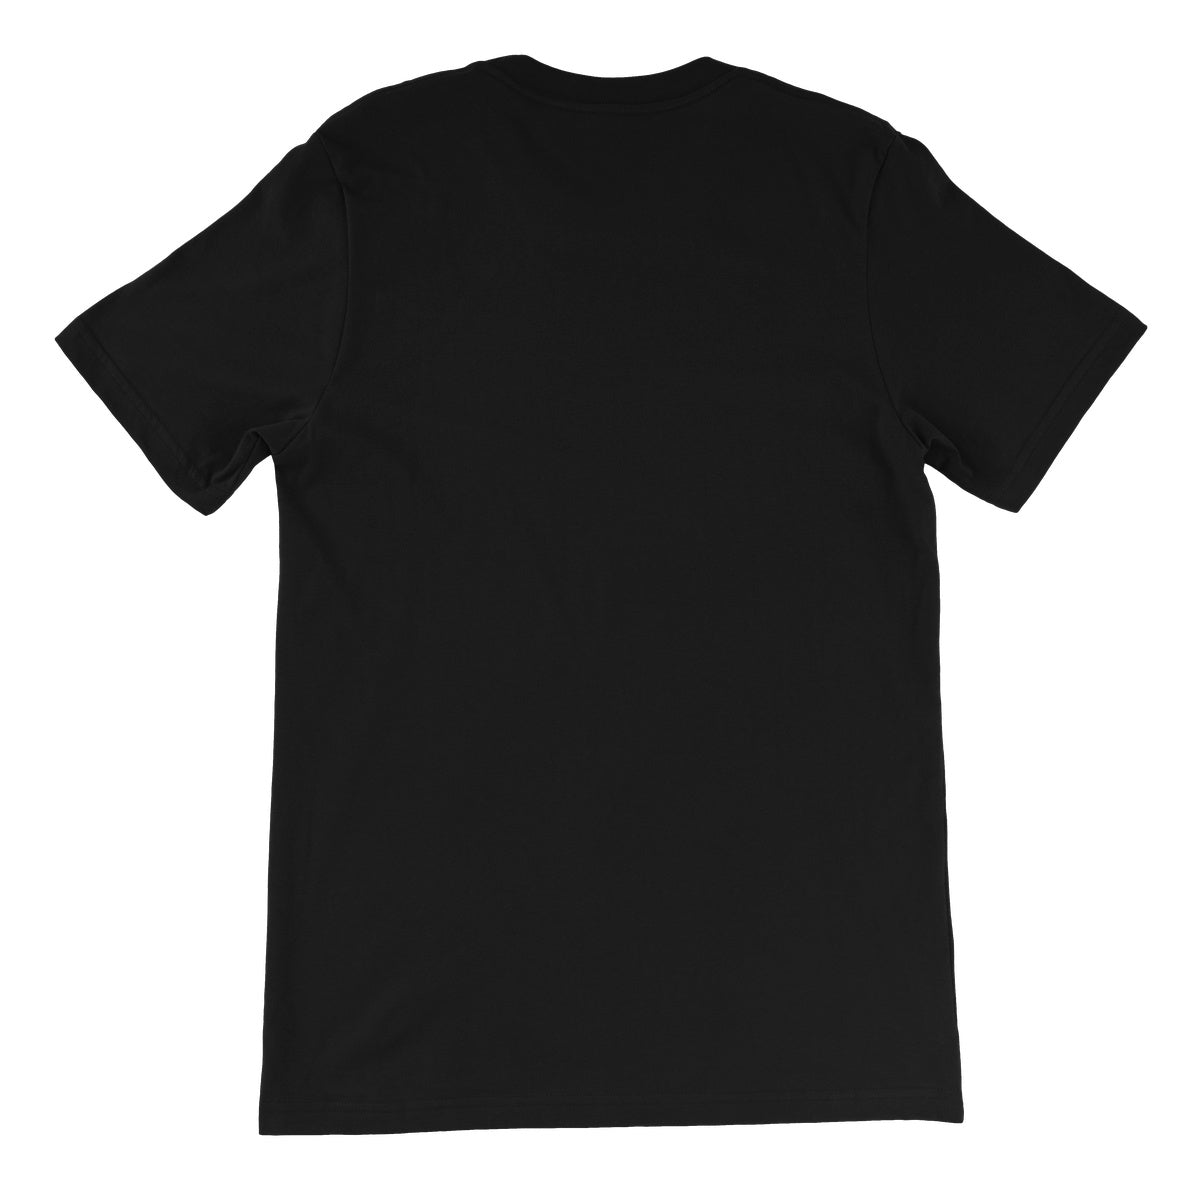 CxE JOB SQUAD 4 LIFE Unisex Short Sleeve T-Shirt